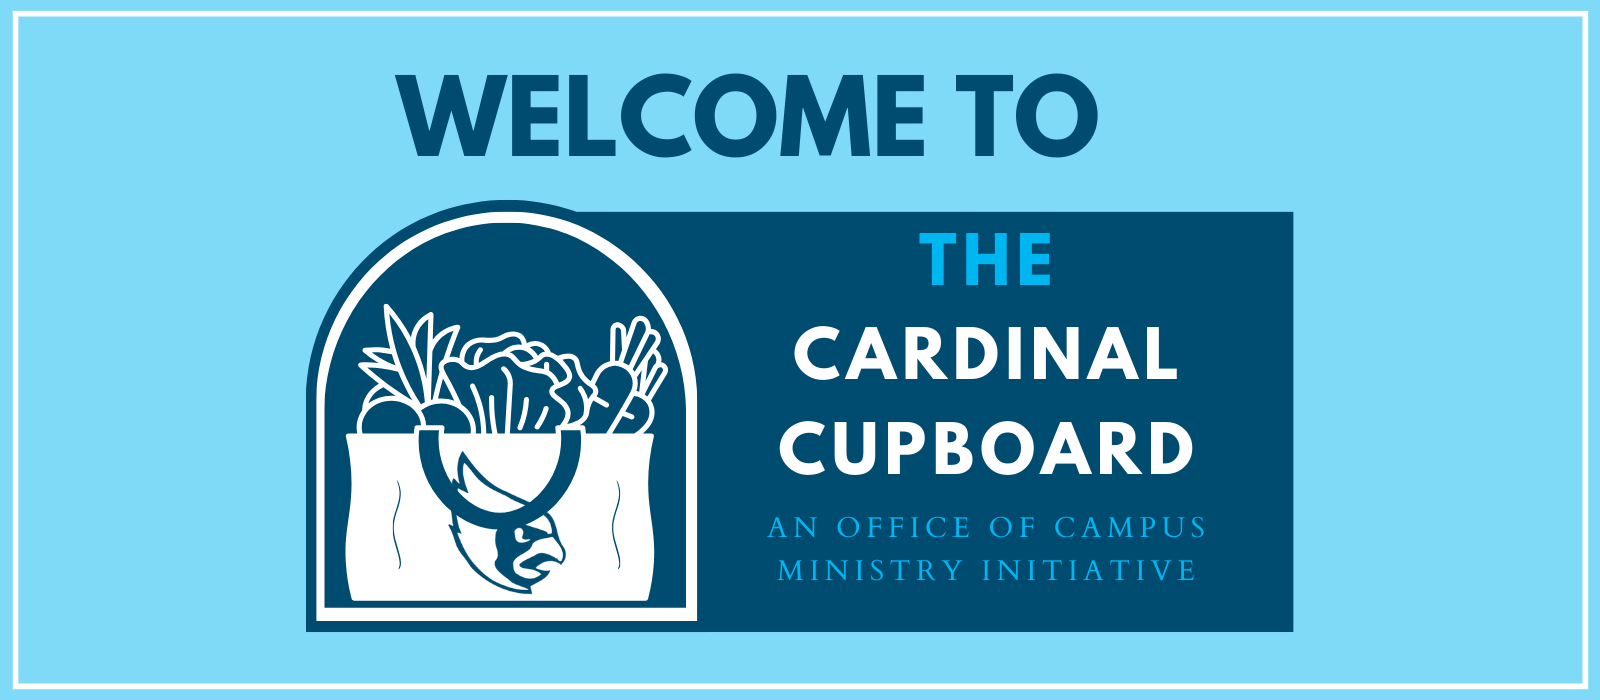 Cardinal Cupboard Welcome Sign